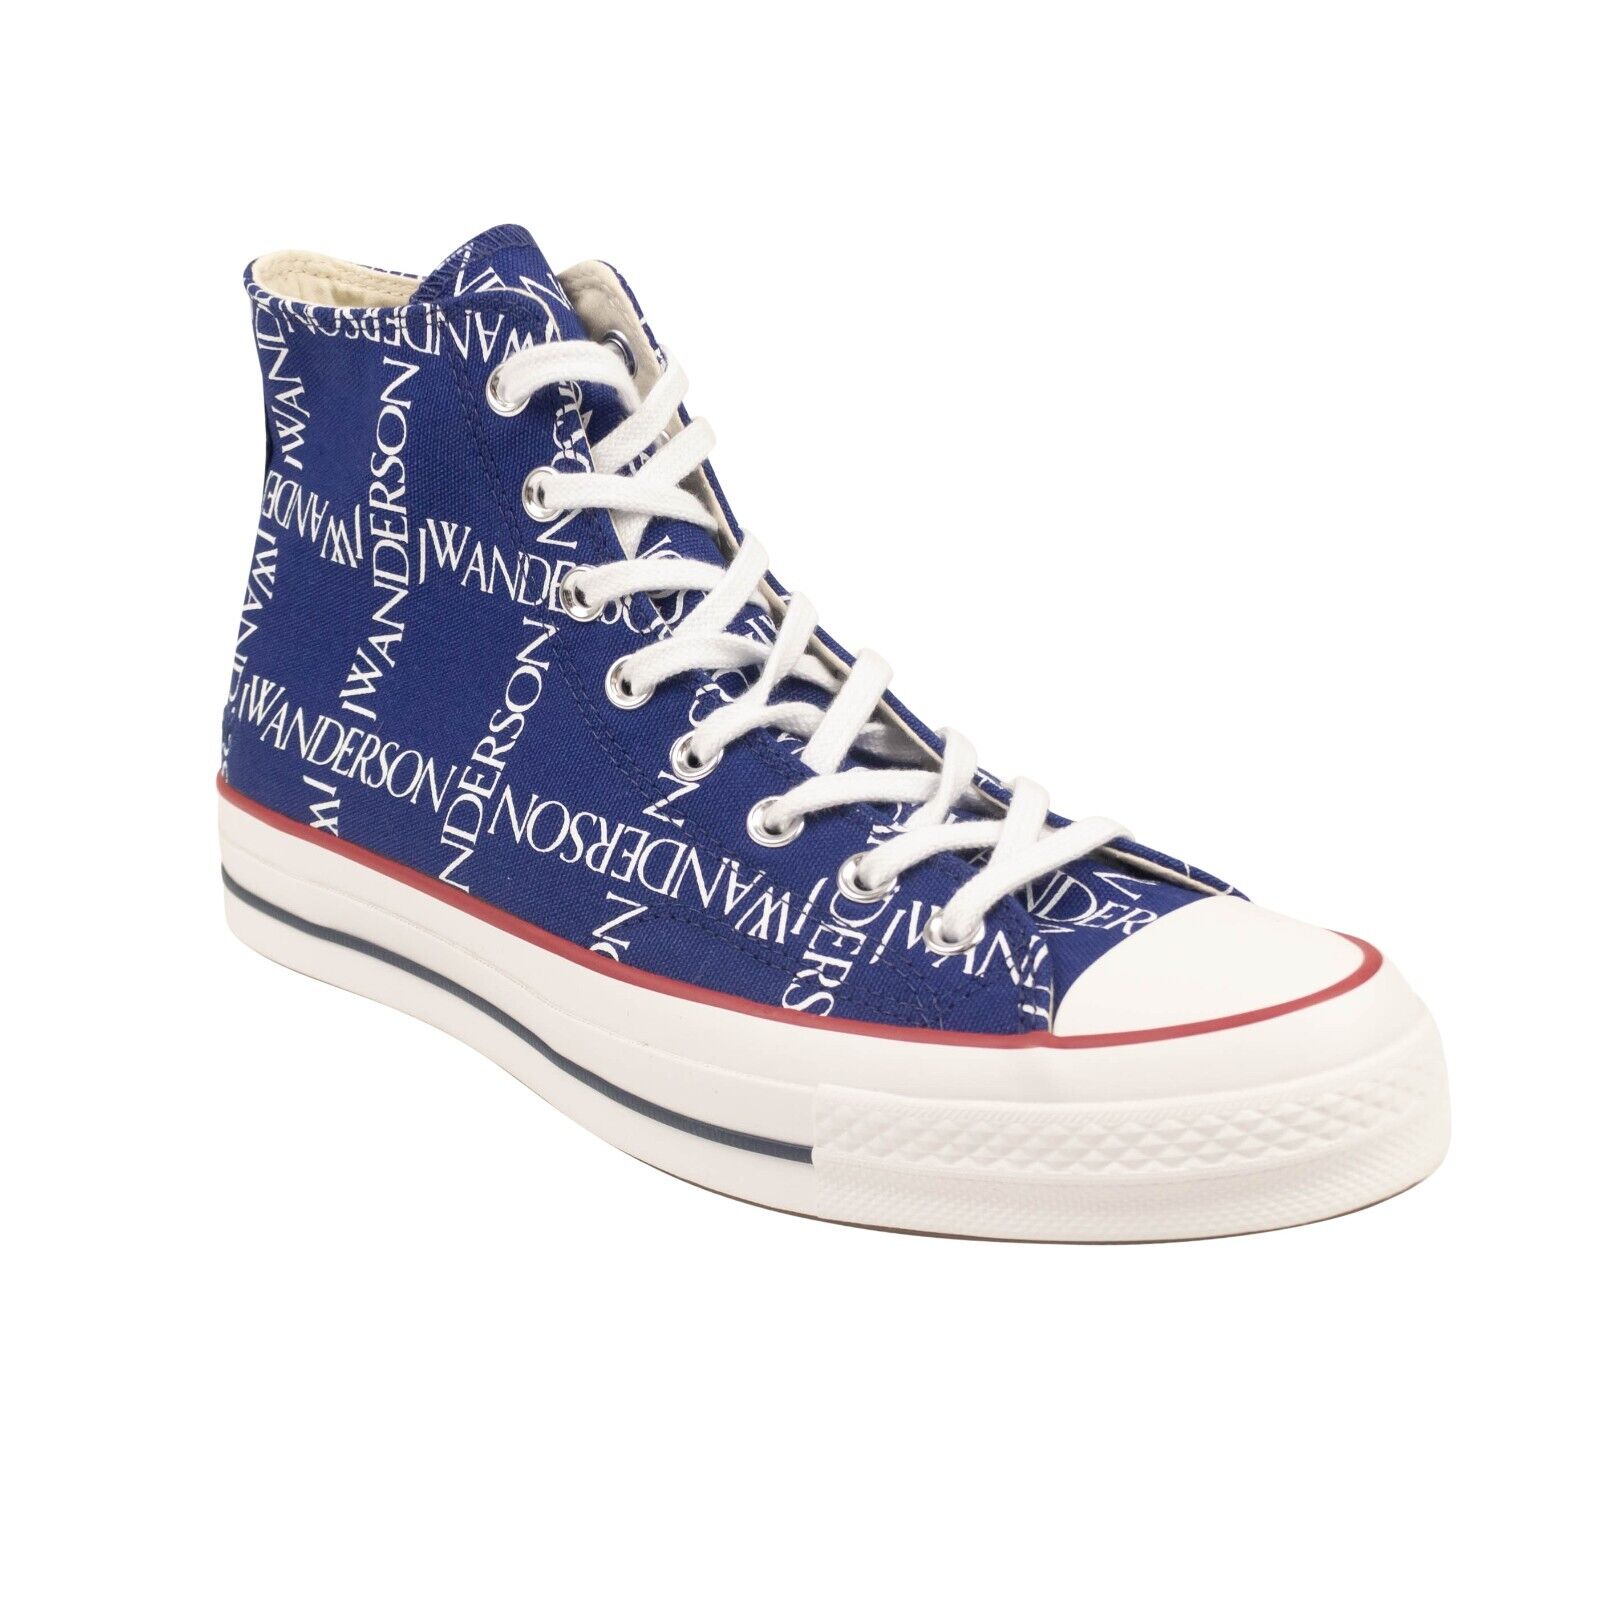 J.W. X CONVERSE Blue 70 Hi Grid Twilight Sneakers Size 10.5 $120 2100000952052 | eBay